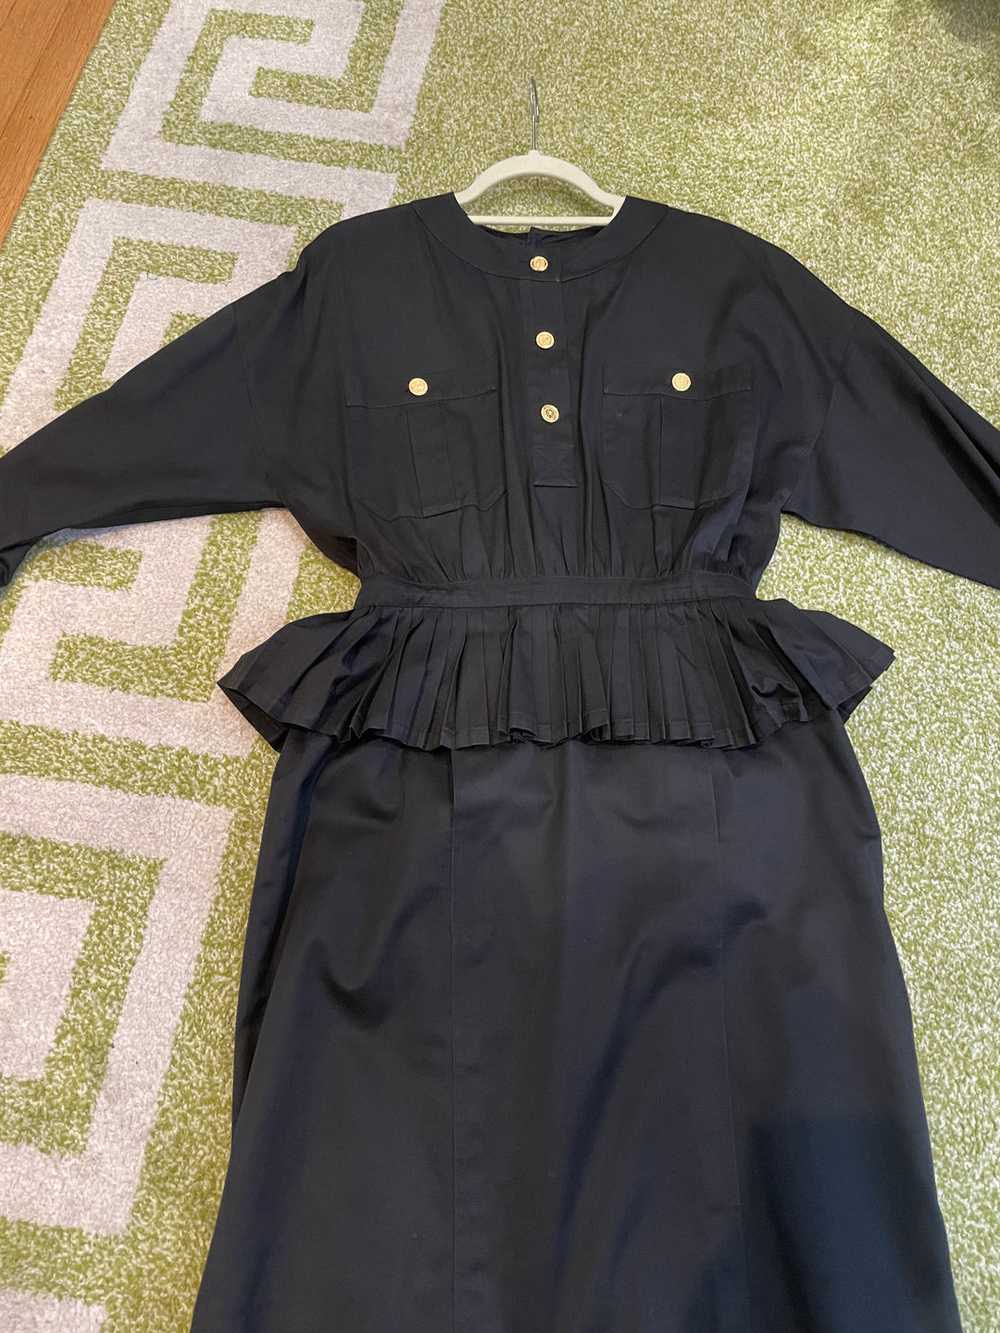 Chanel Black Cotton Dress (Size 4) - image 3